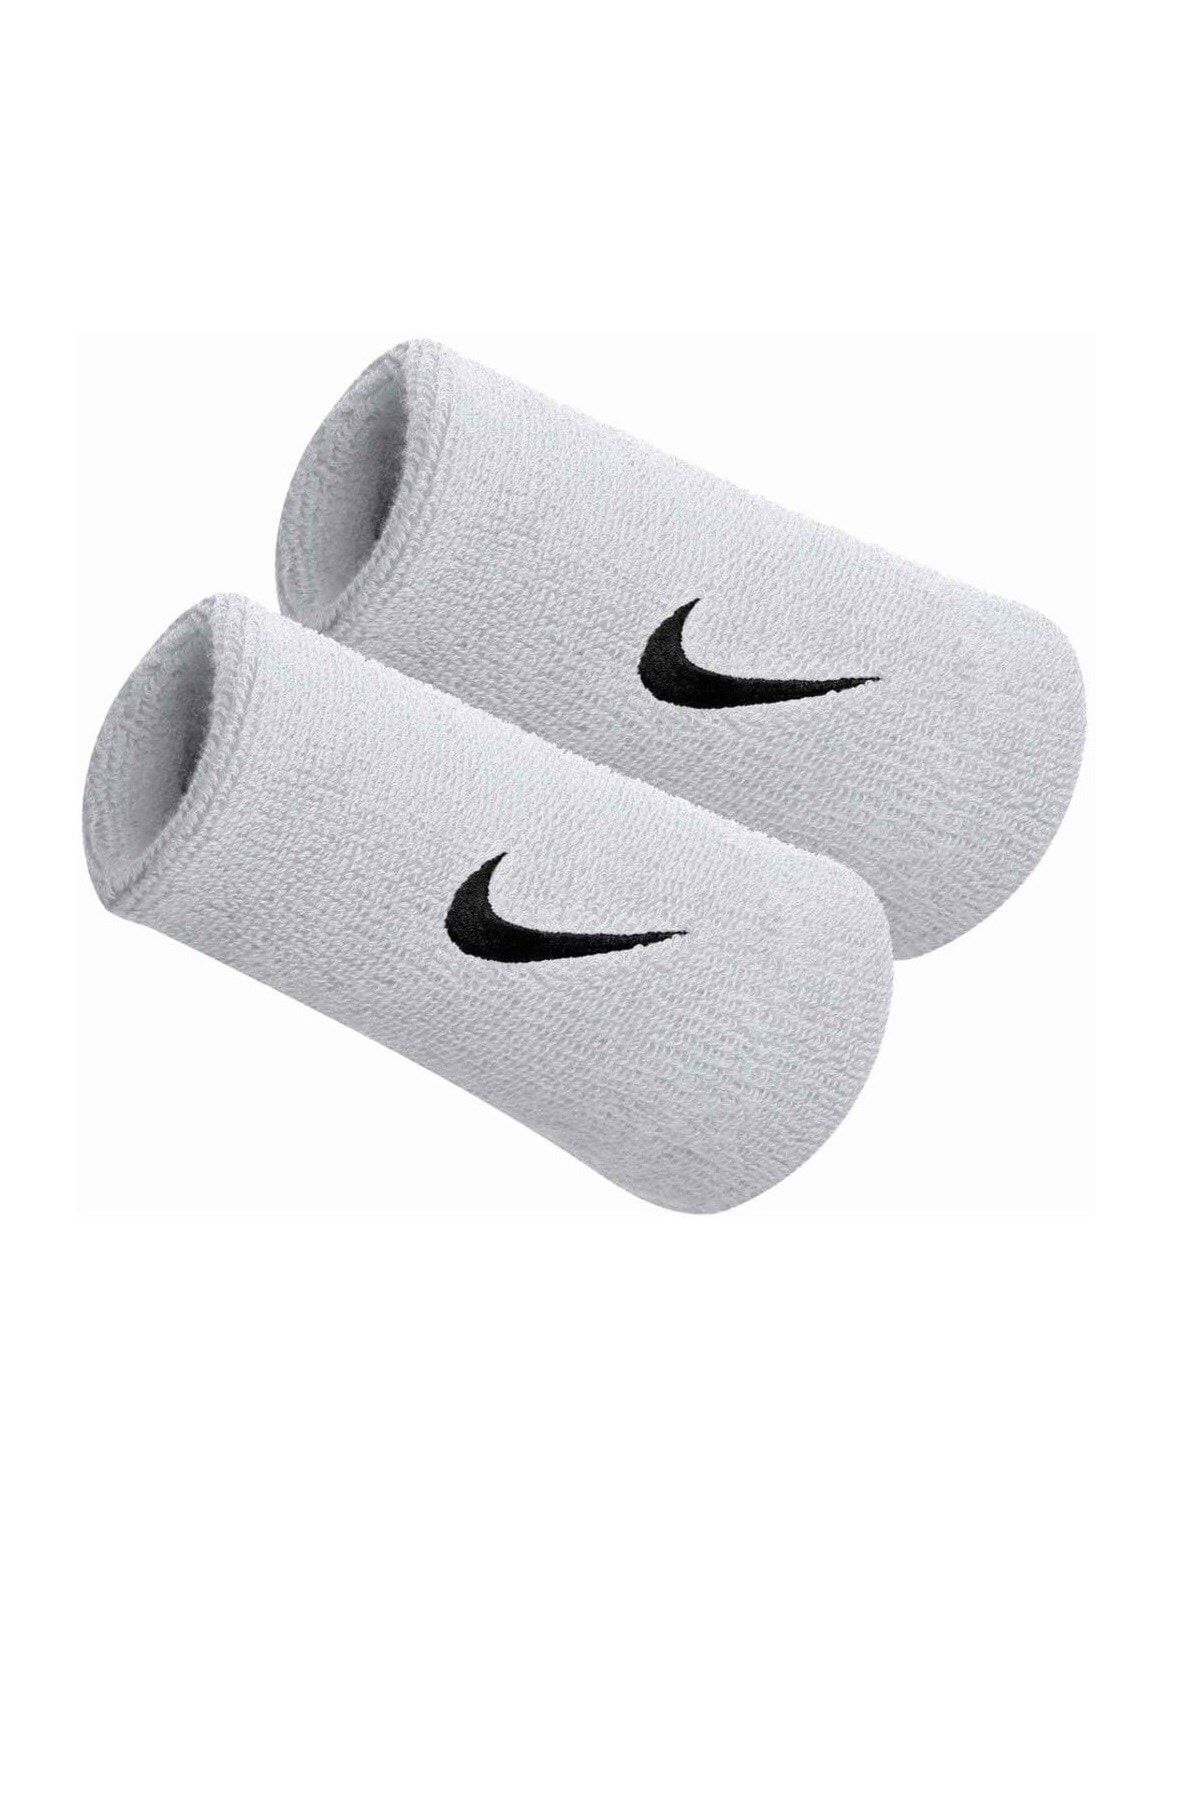 Nike Swoosh Wristband 2 Pack | SportsDirect.com Ireland